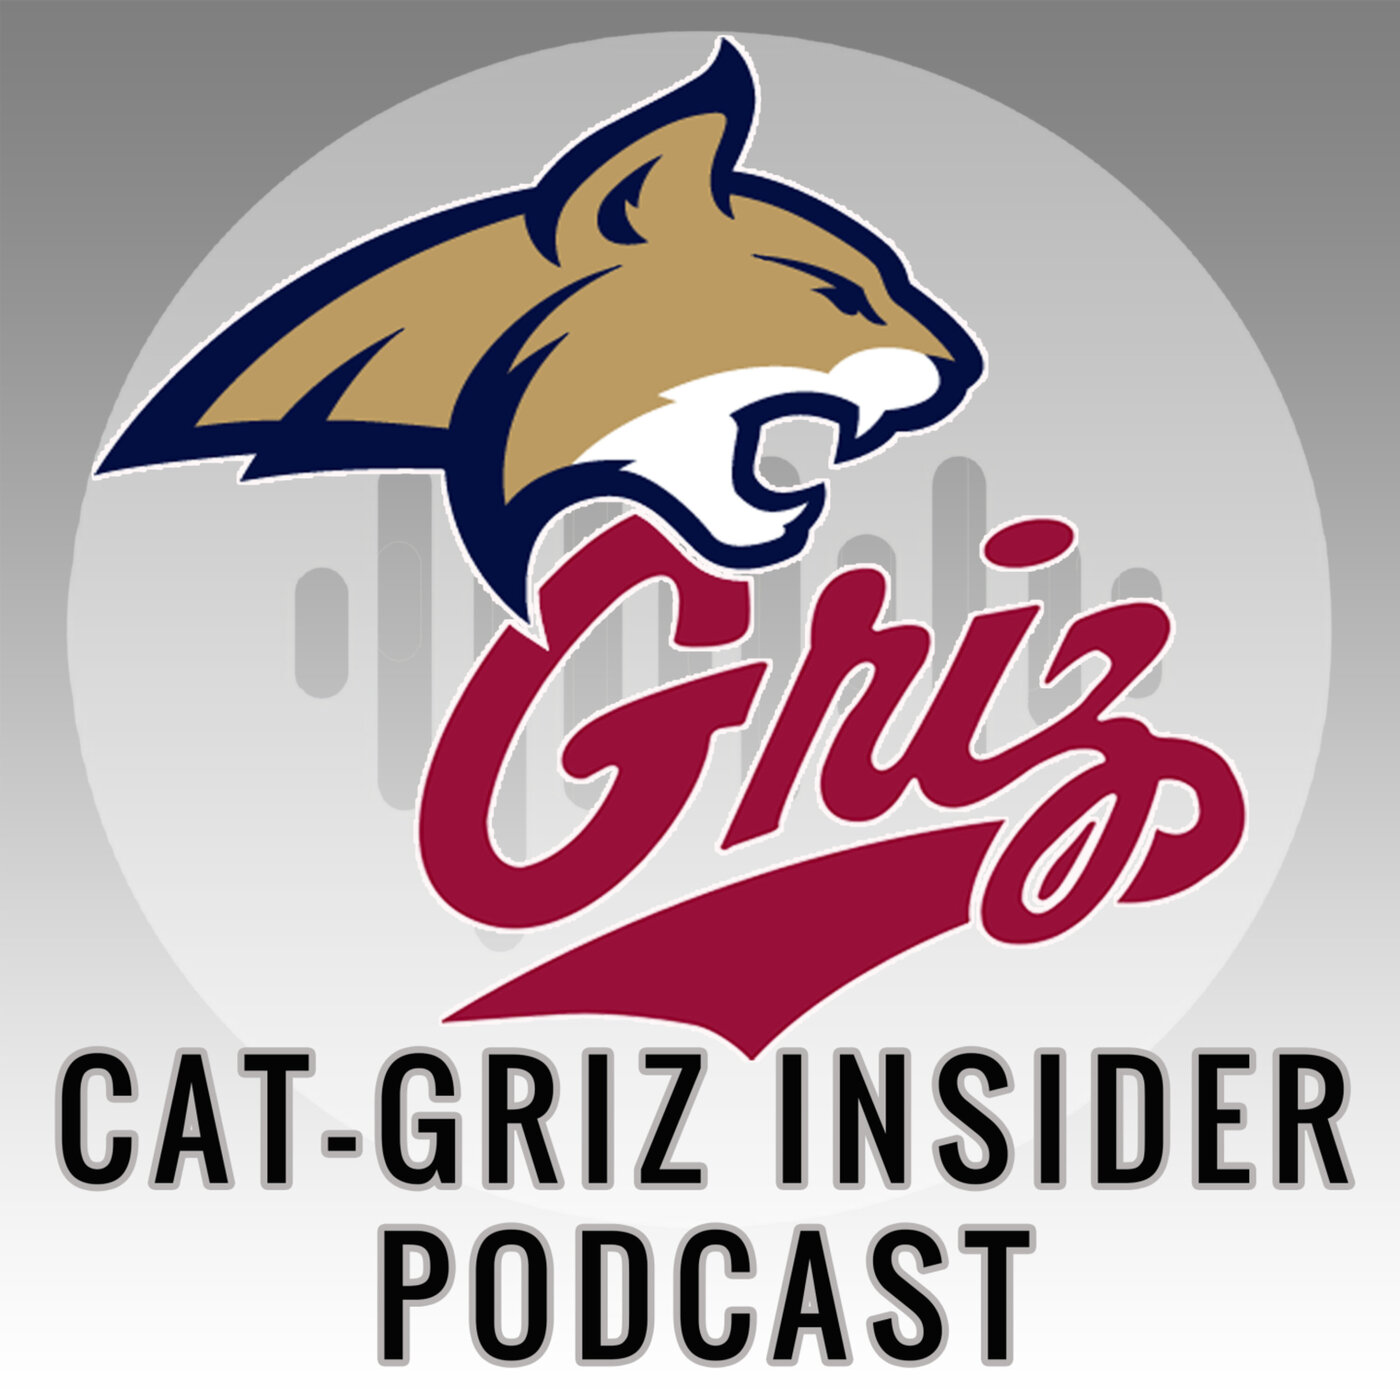 Cat-Griz Insider Podcast: Episode 4, feat. Marc Mariani